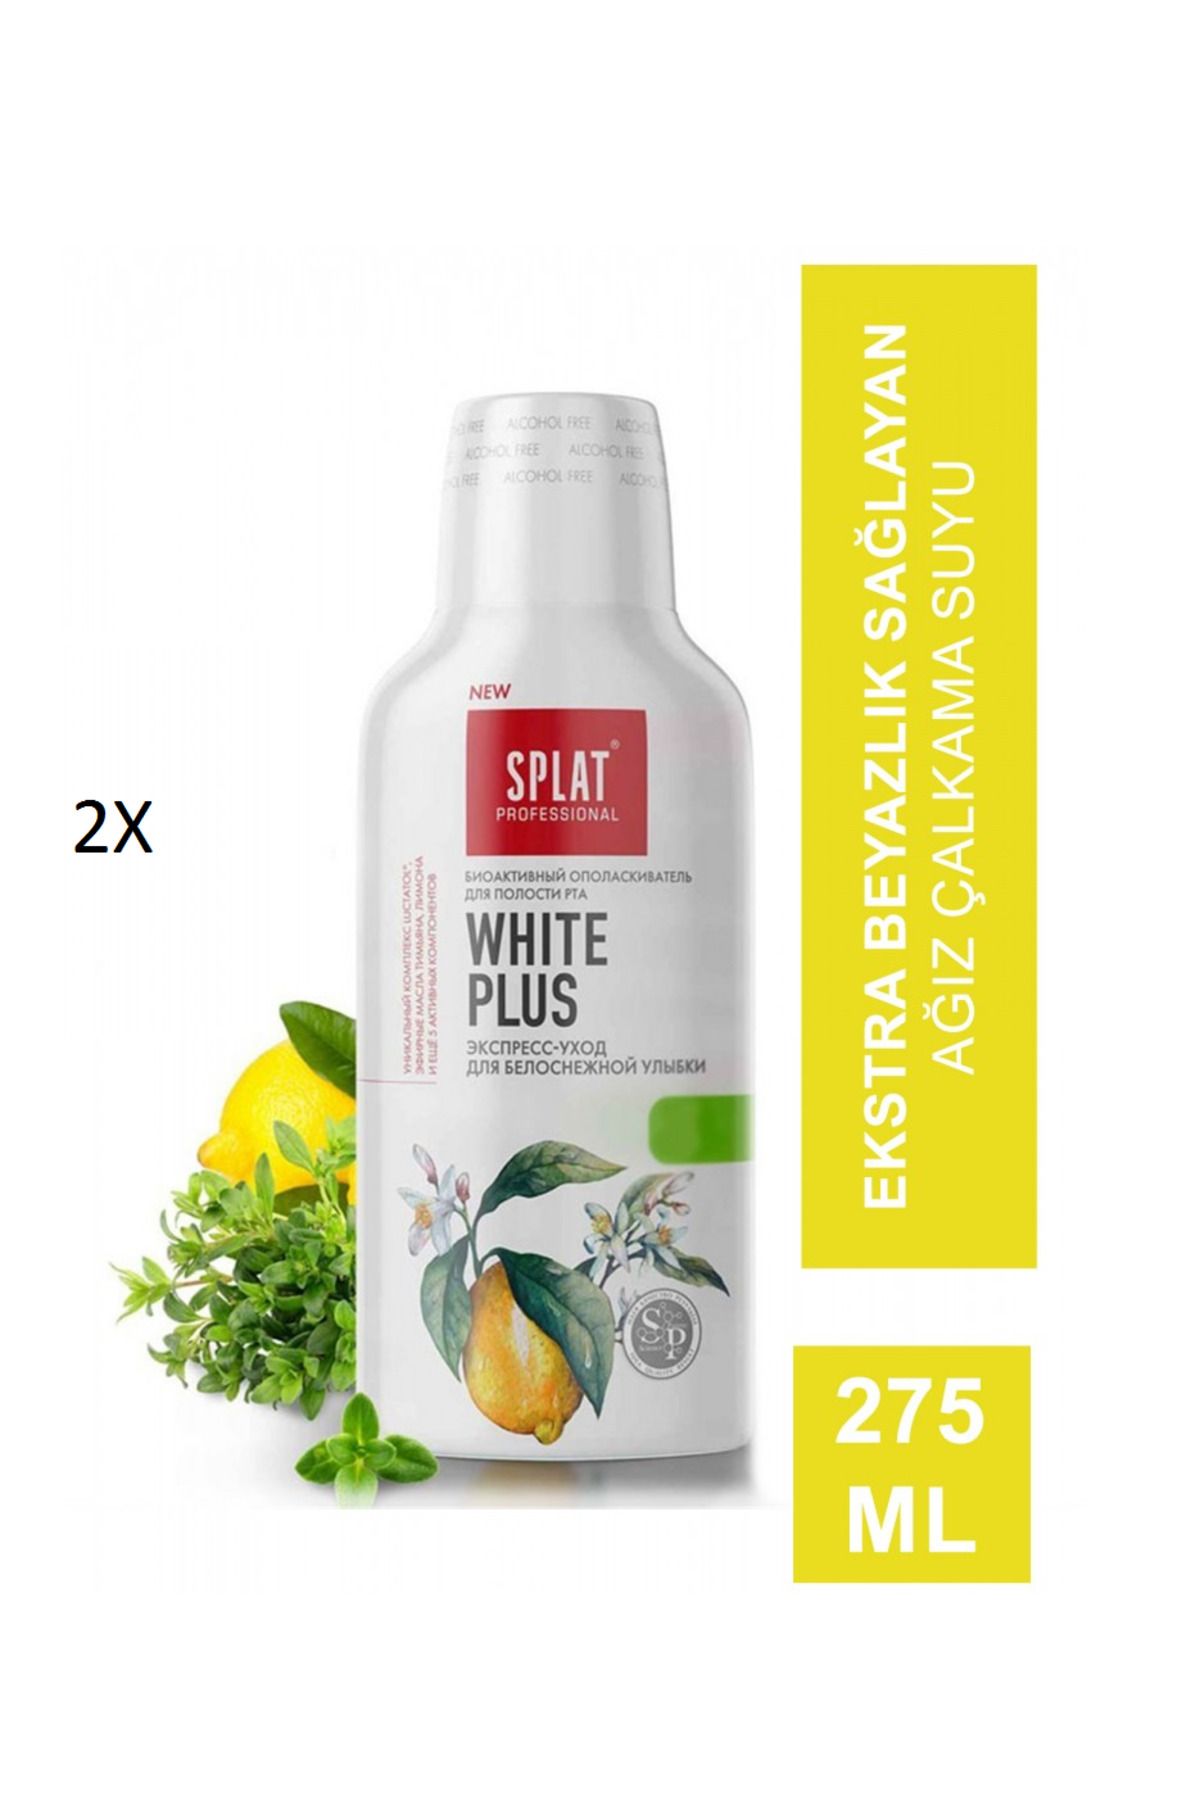 Splat Professional White Plus Ağız Çalkalama Suyu 275 ml ( 2 ADET )